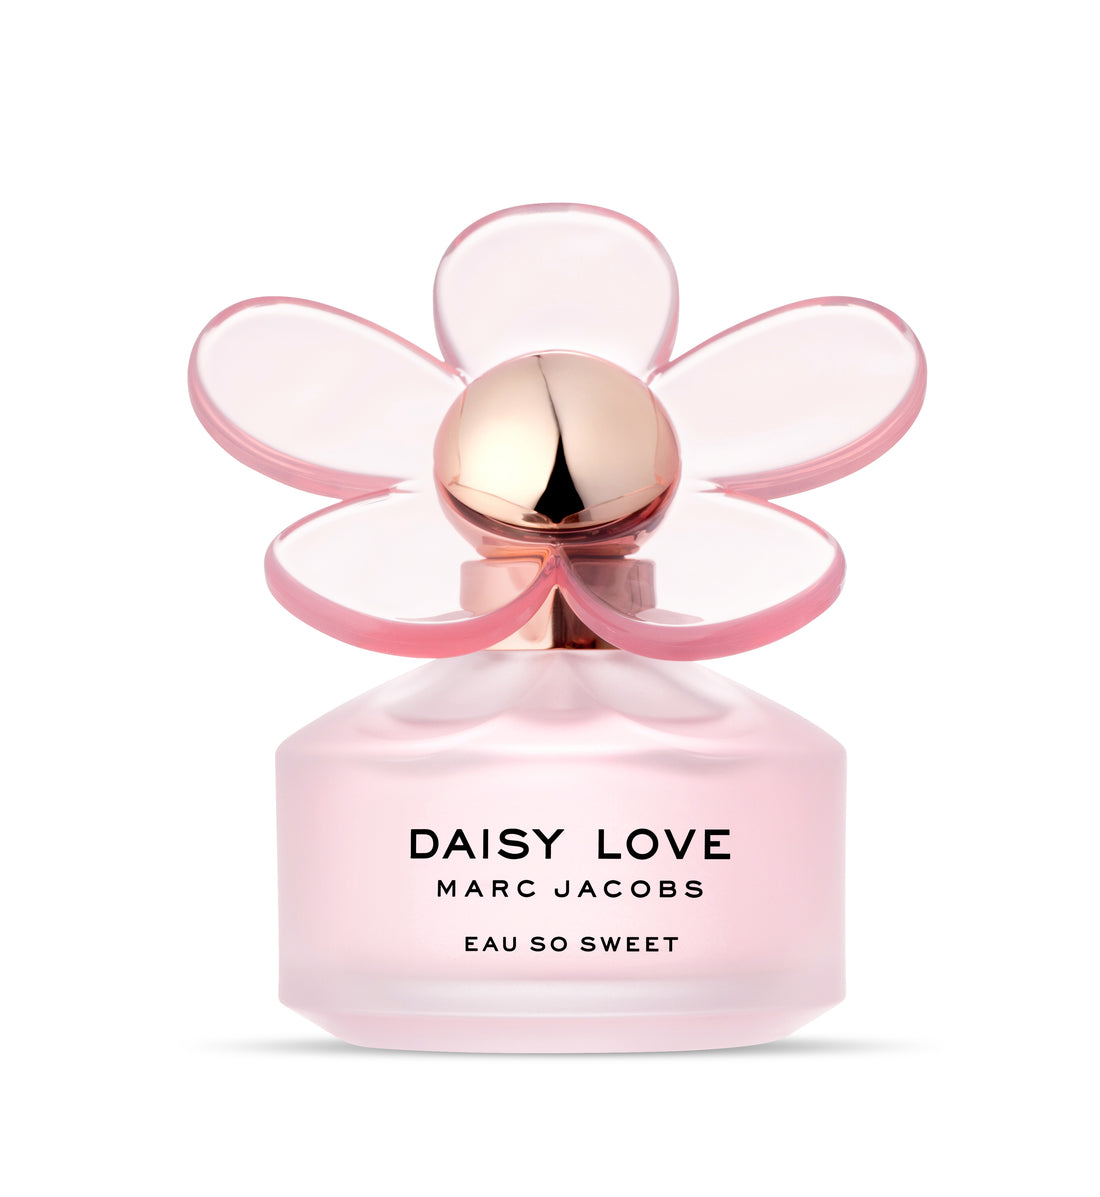 Perfumes Similar to Marc Jacobs Daisy Love Eau So Sweet